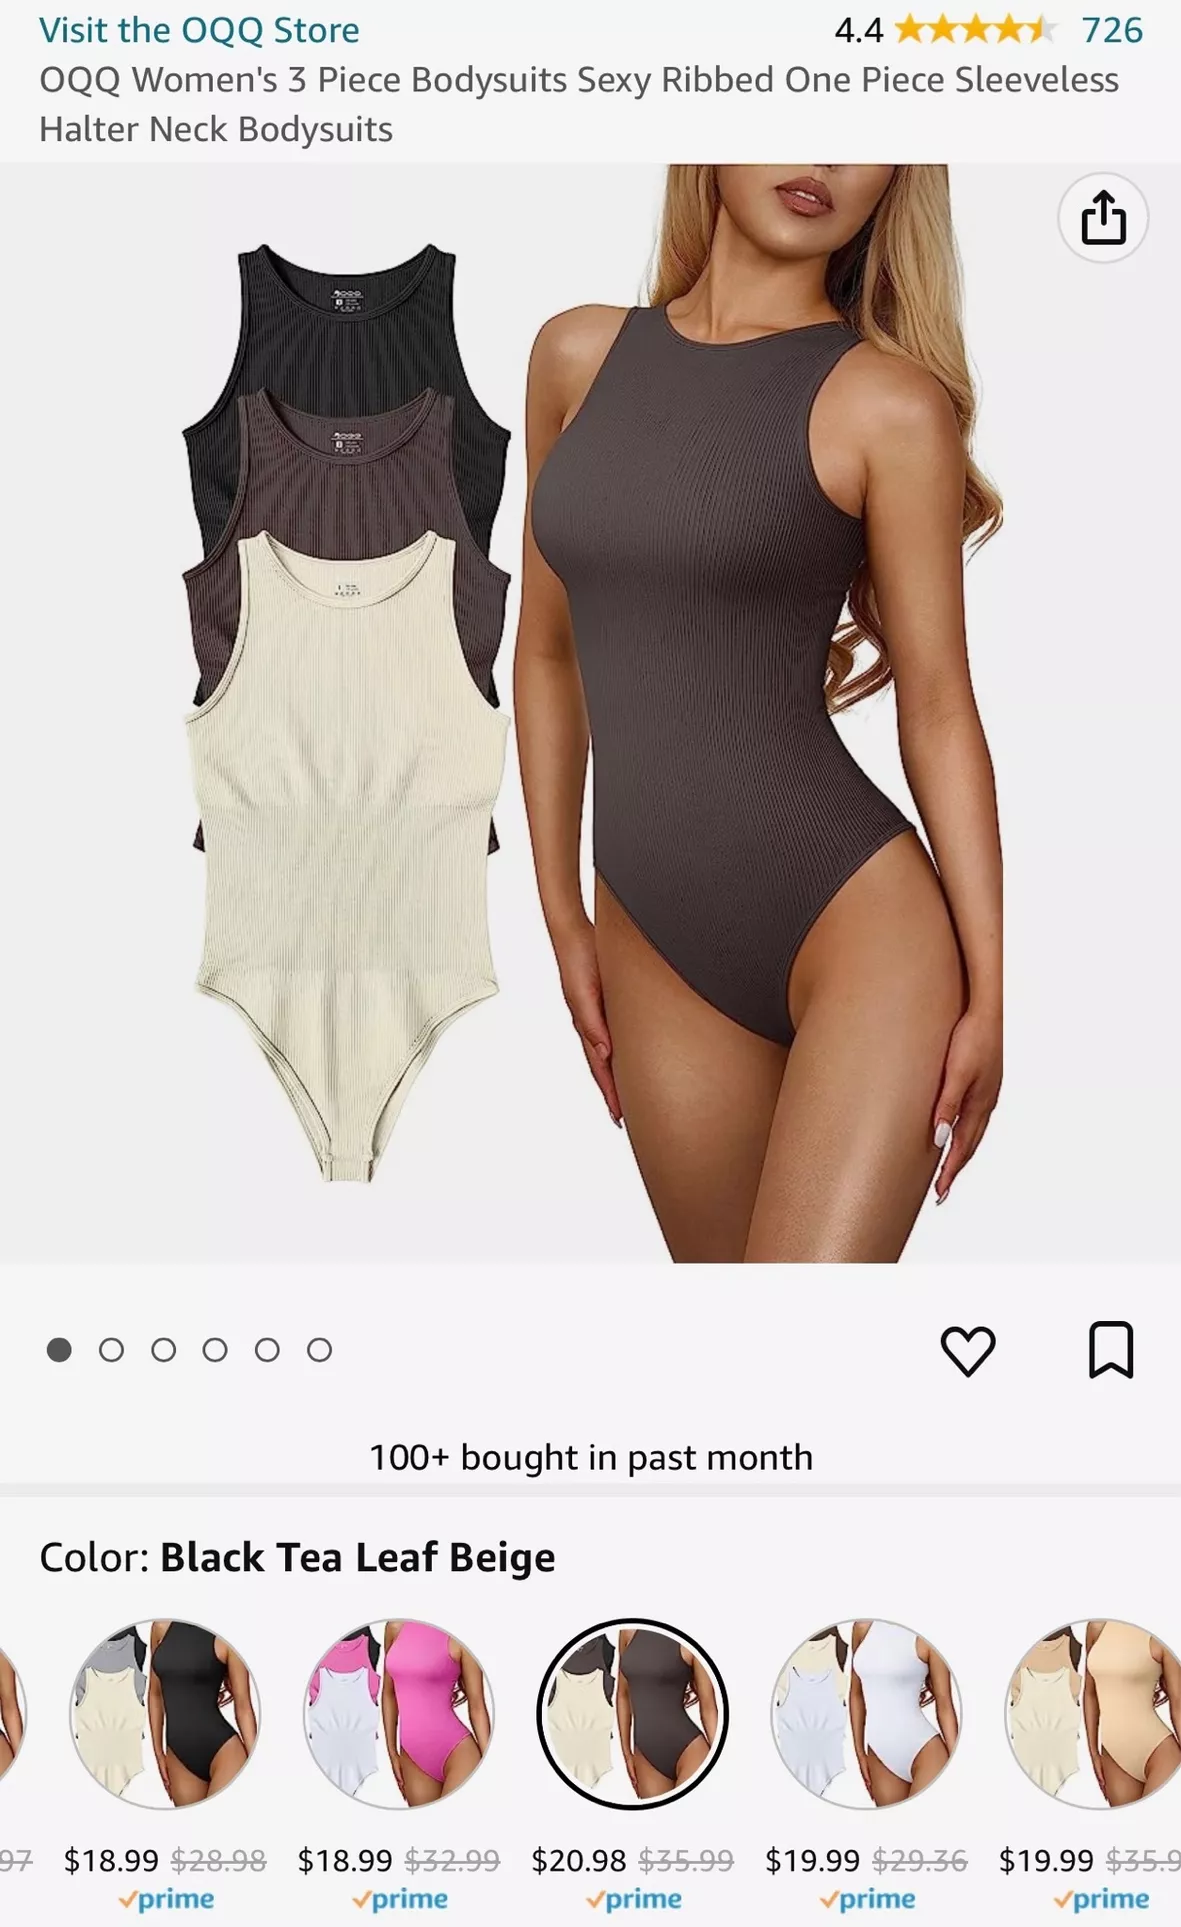  Womens 3 Piece Bodysuits Sexy Ribbed Sleeveless